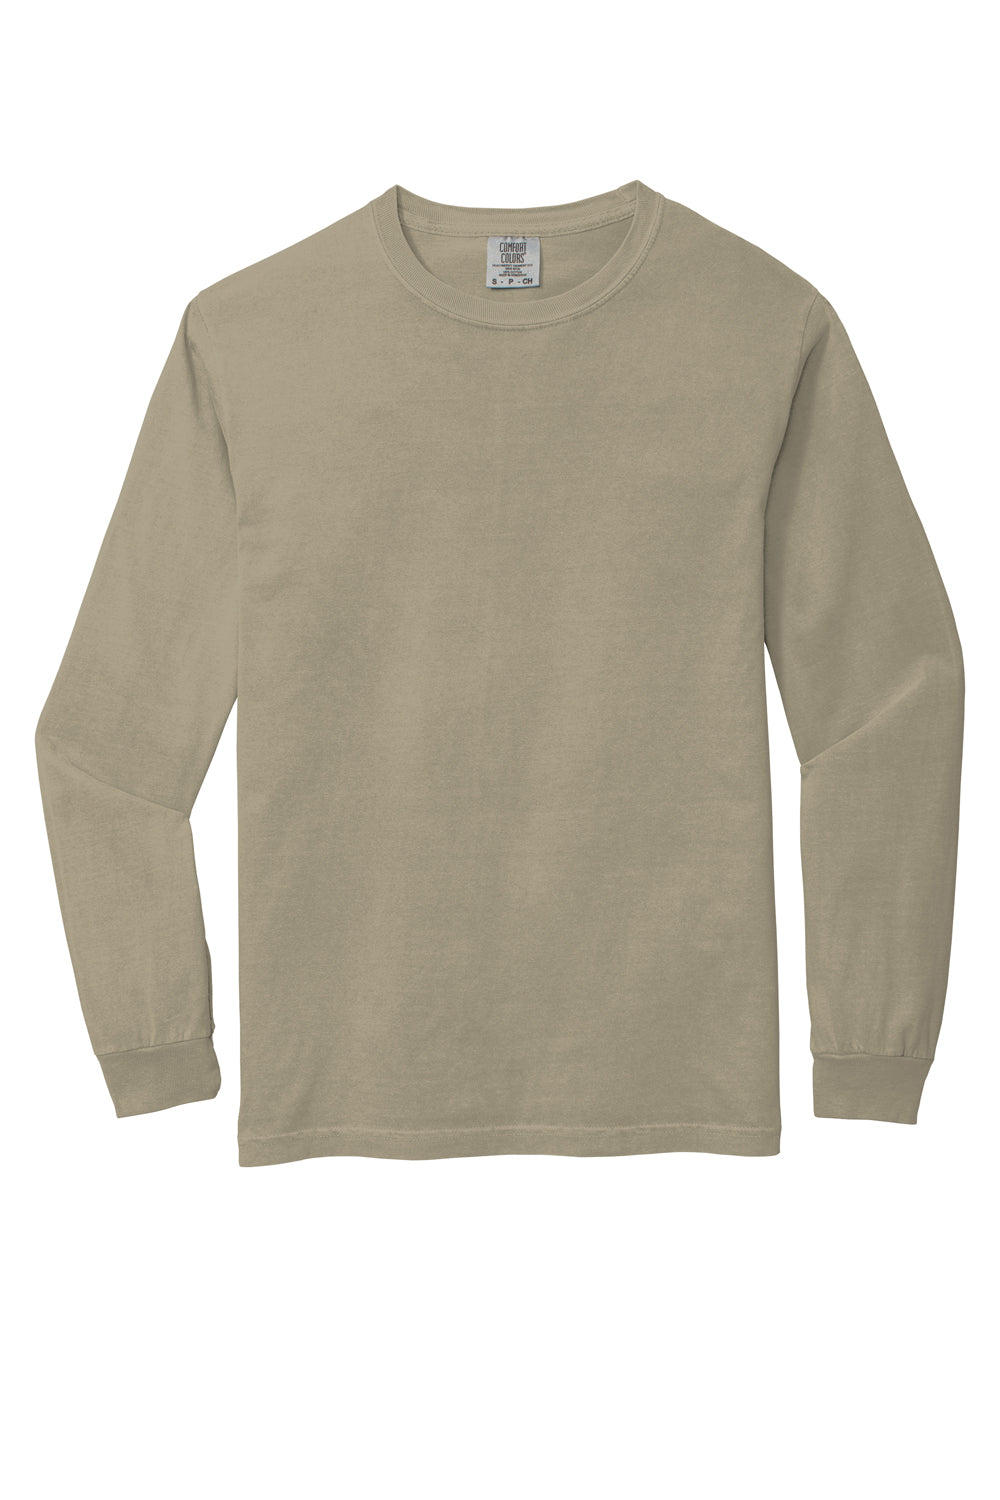 Comfort Colors 6014/C6014 Mens Long Sleeve Crewneck T-Shirt Sandstone Flat Front